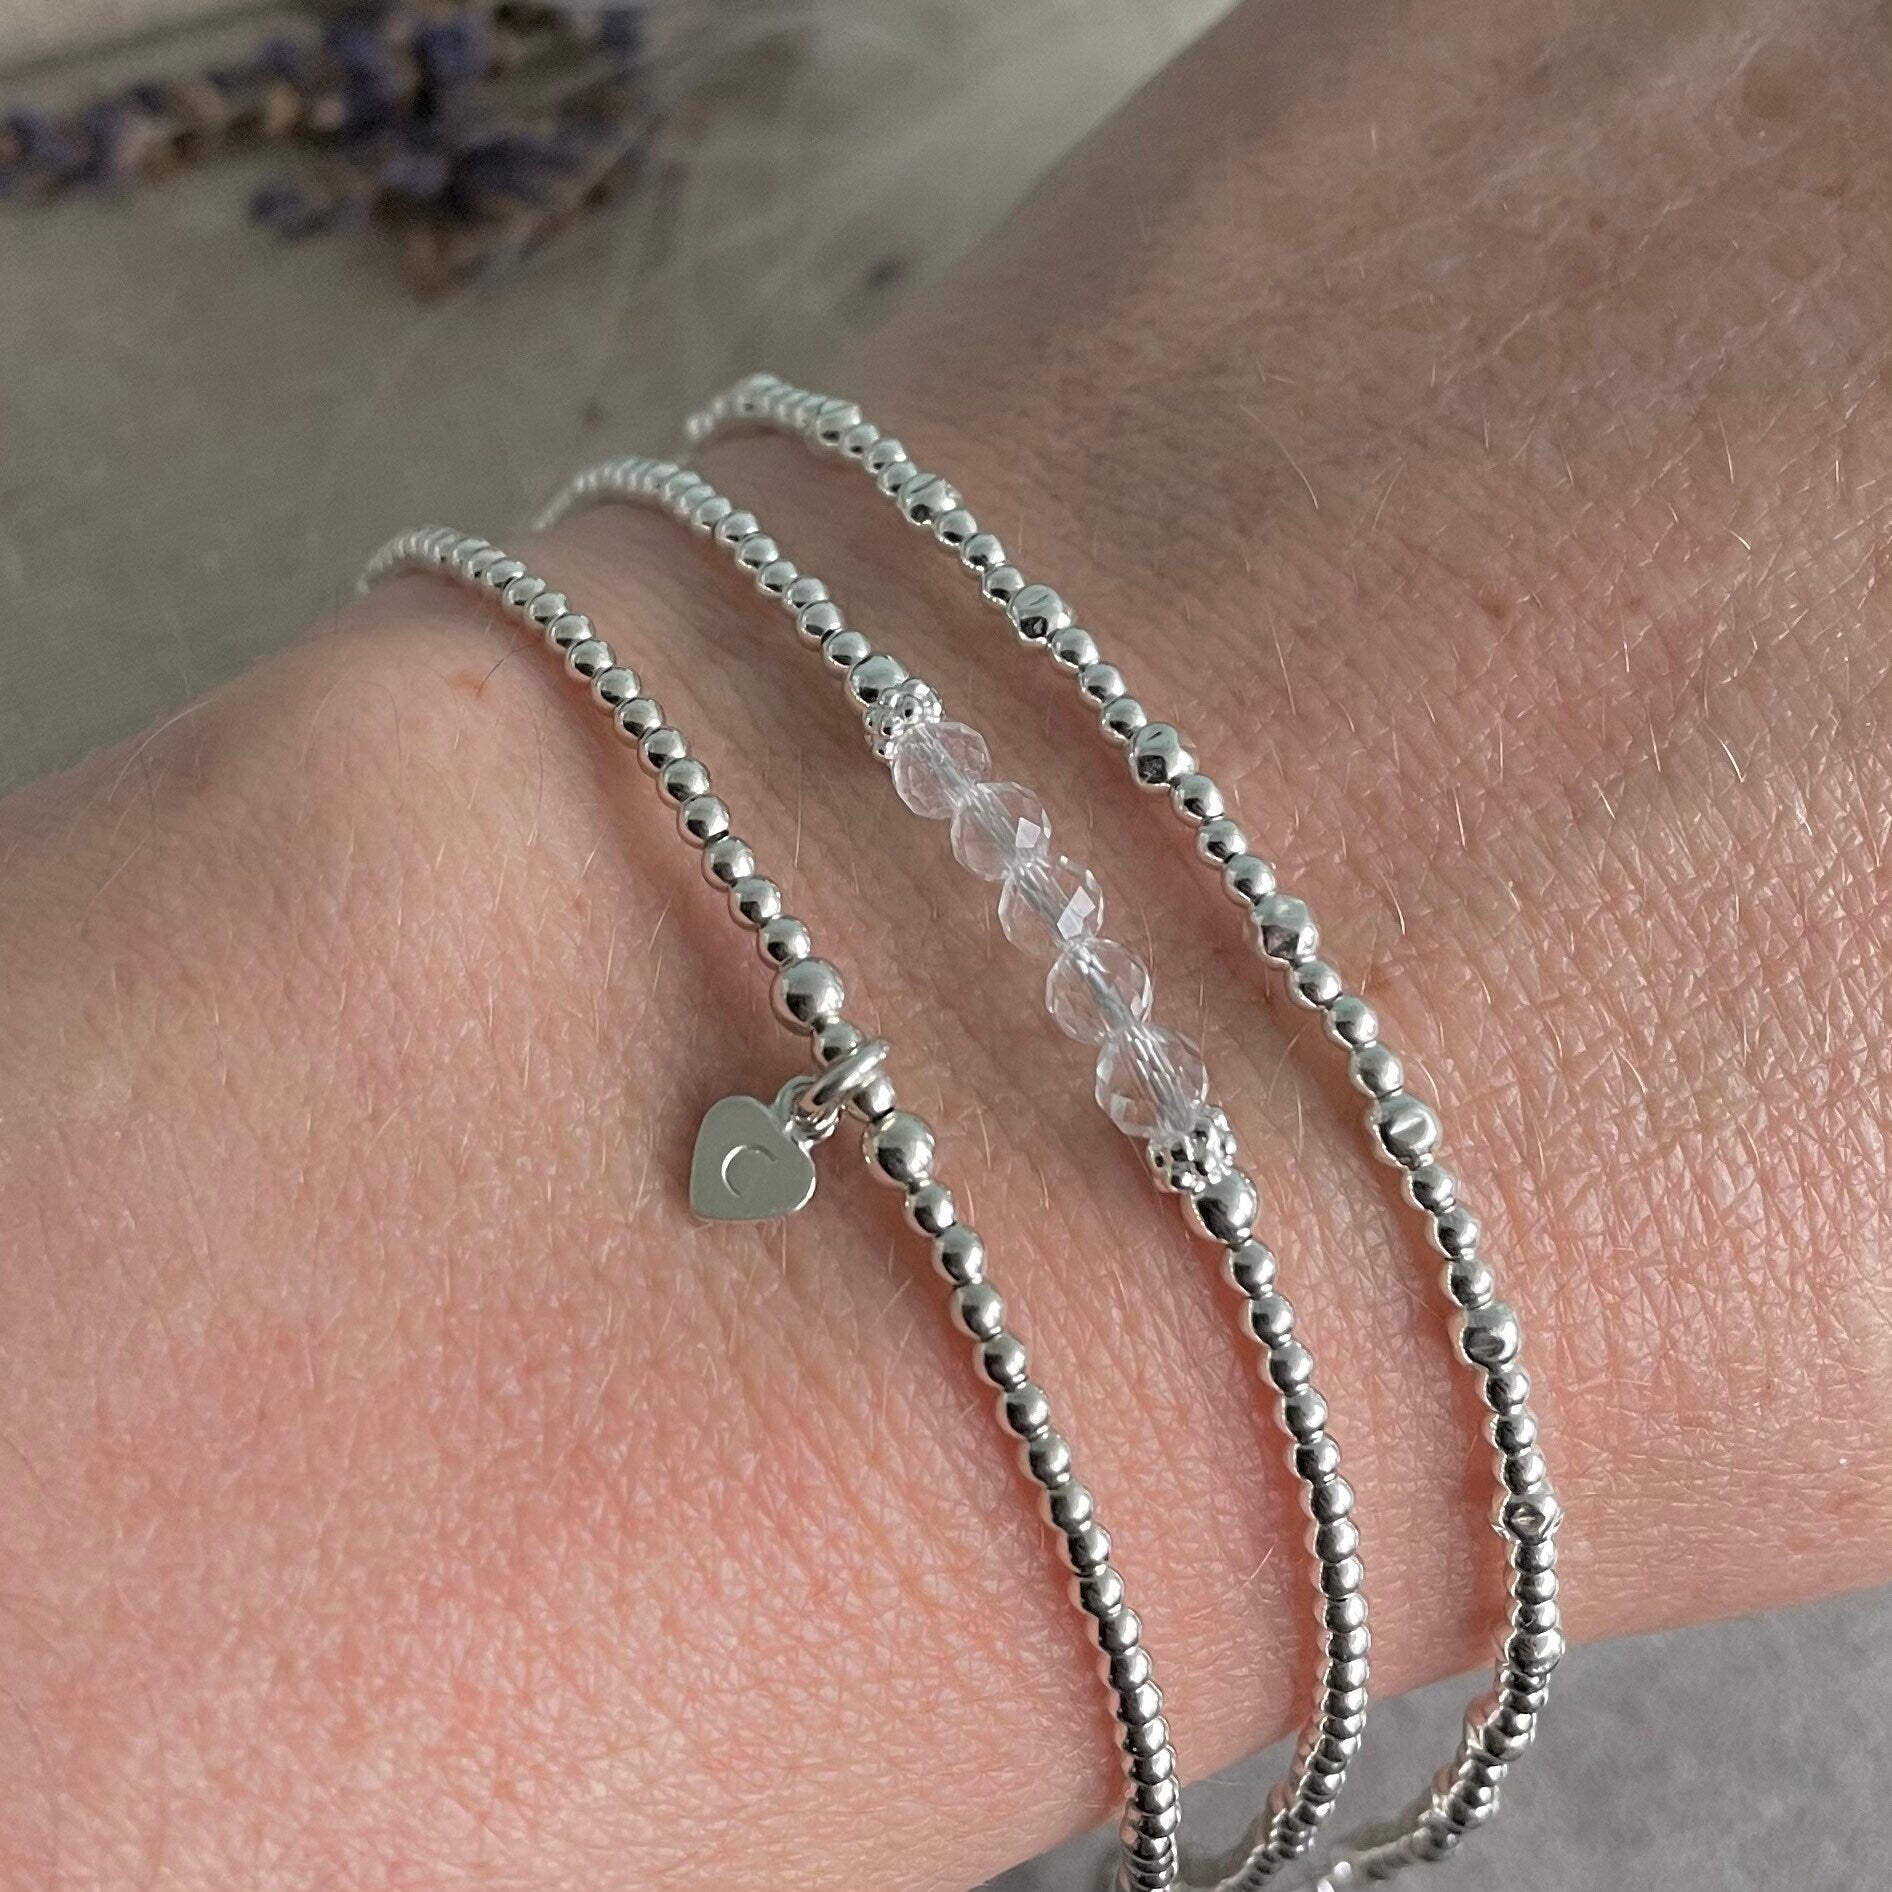 Personalised April Birthstone Rock Quartz Bracelet Set, Dainty Sterling Silver Stacking Bracelets for Women